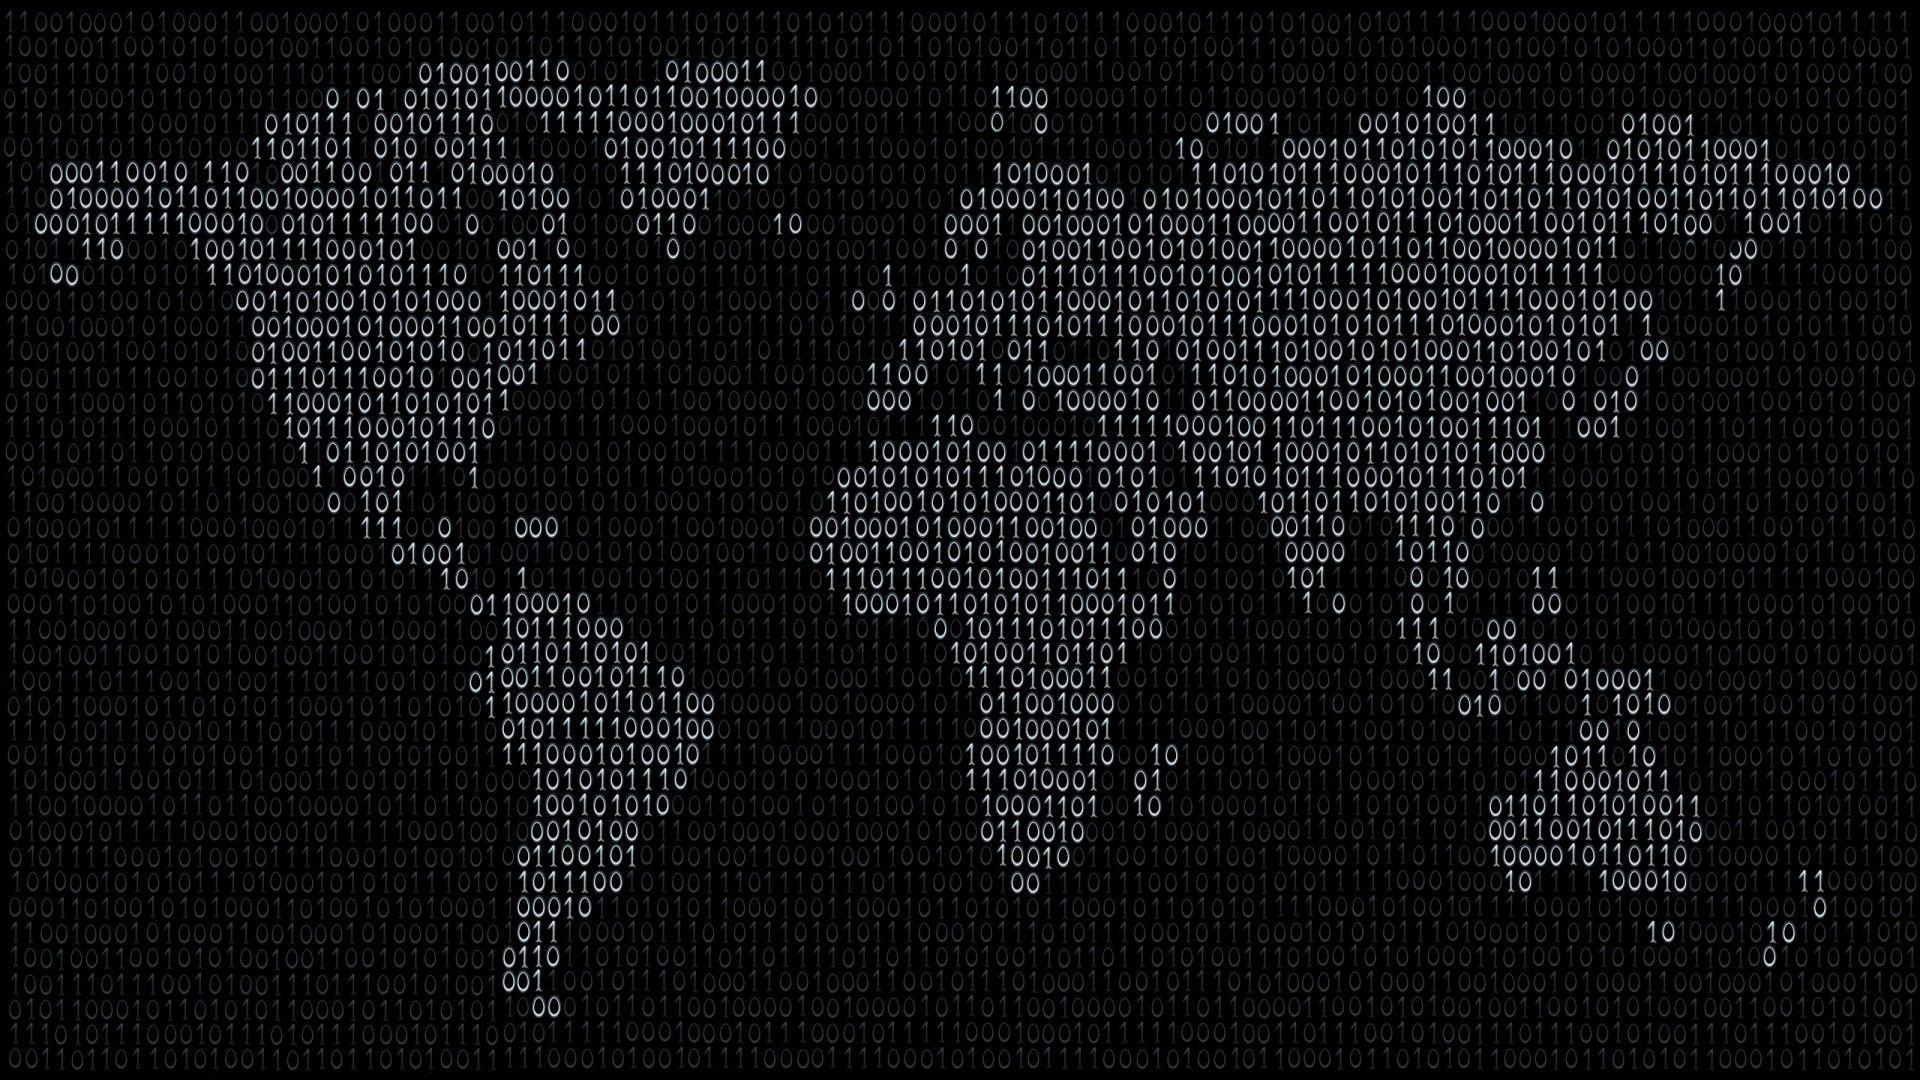 World Map Black Wallpapers HD - Wallpaper Cave